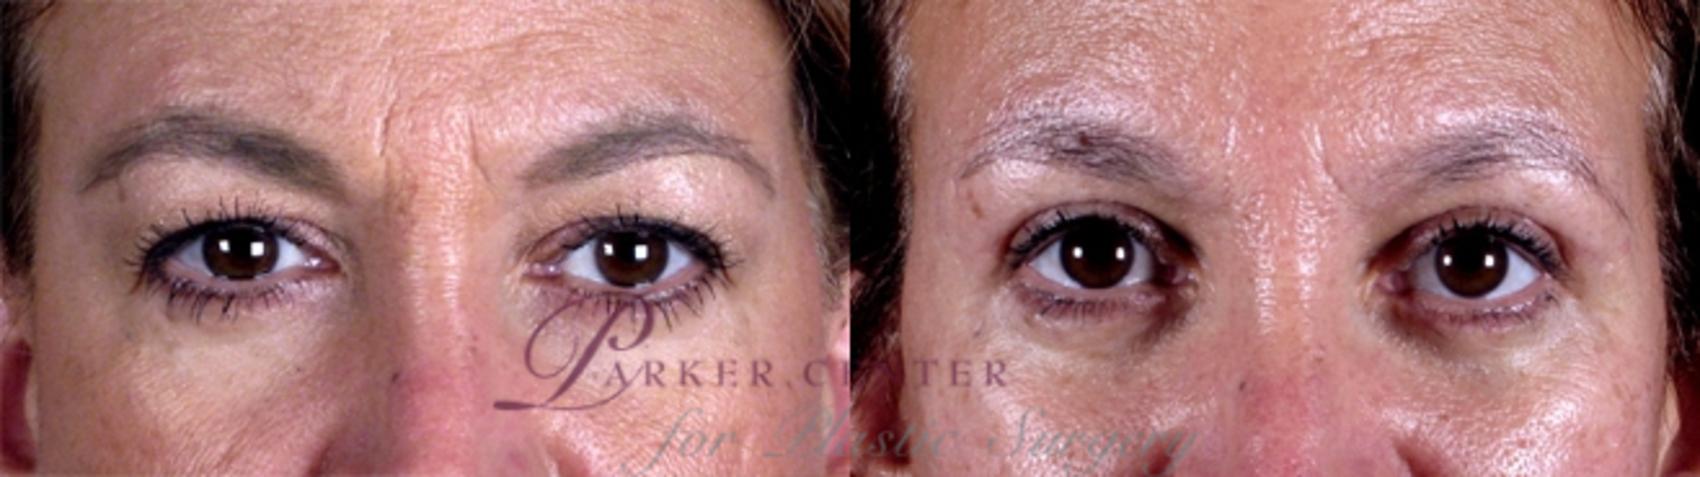 Eyelid Lift Case 1173 Before & After View 1  | Paramus, NJ | Parker Center for Plastic Surgery